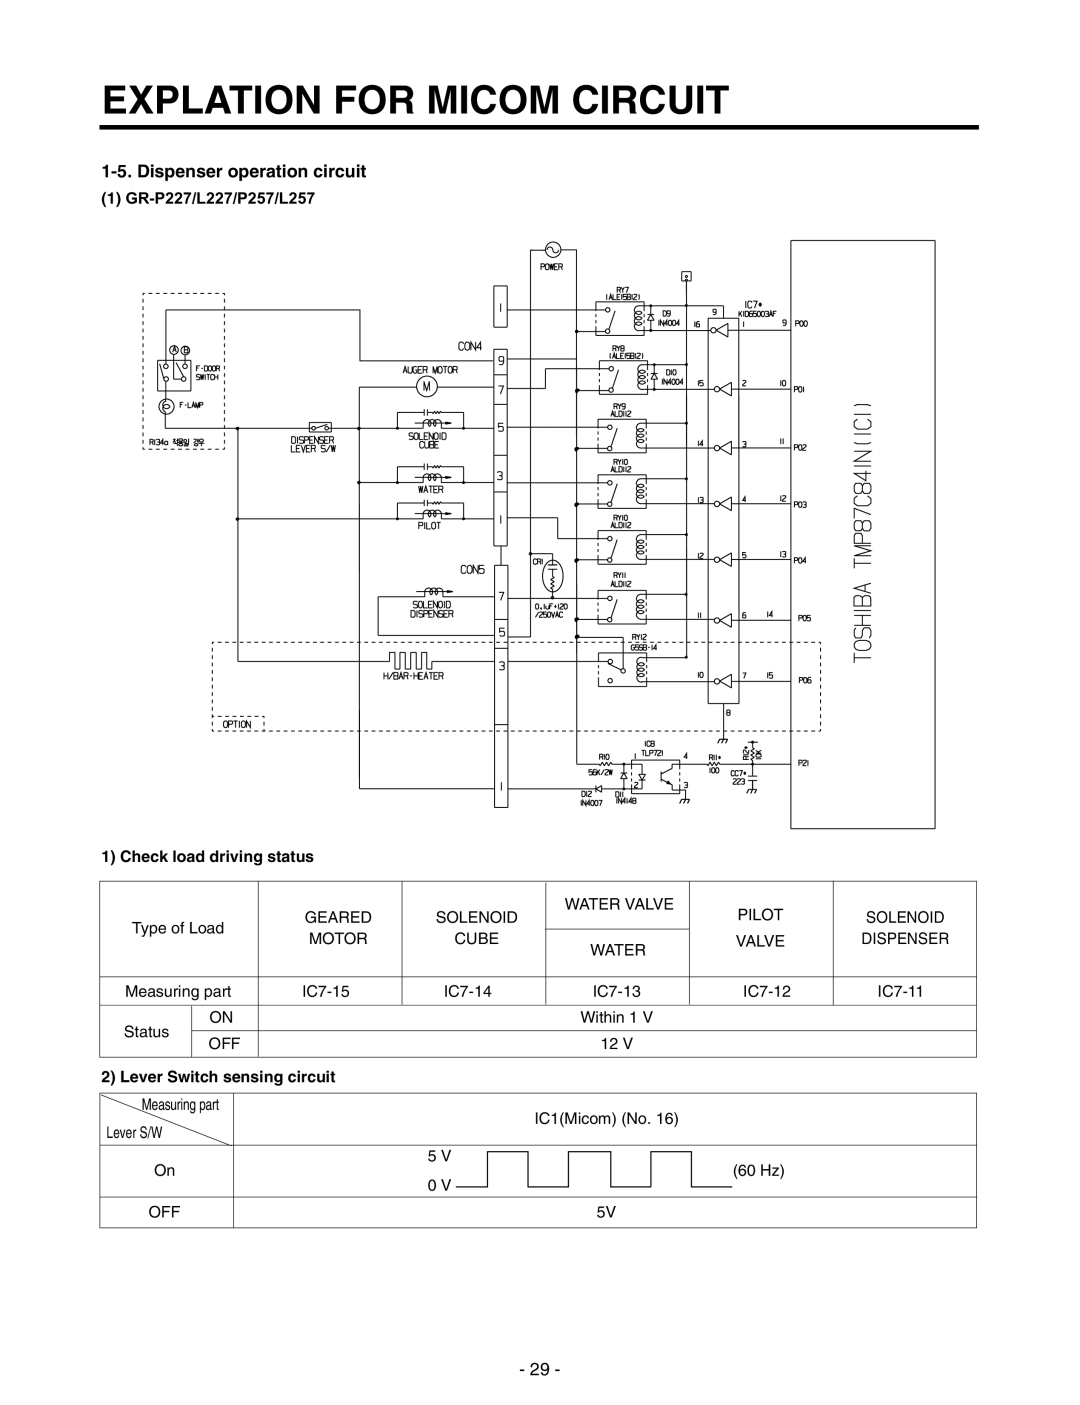 LG Electronics GR-P257/L257 service manual Dispenser operation circuit, Explation For Micom Circuit, GR-P227/L227/P257/L257 